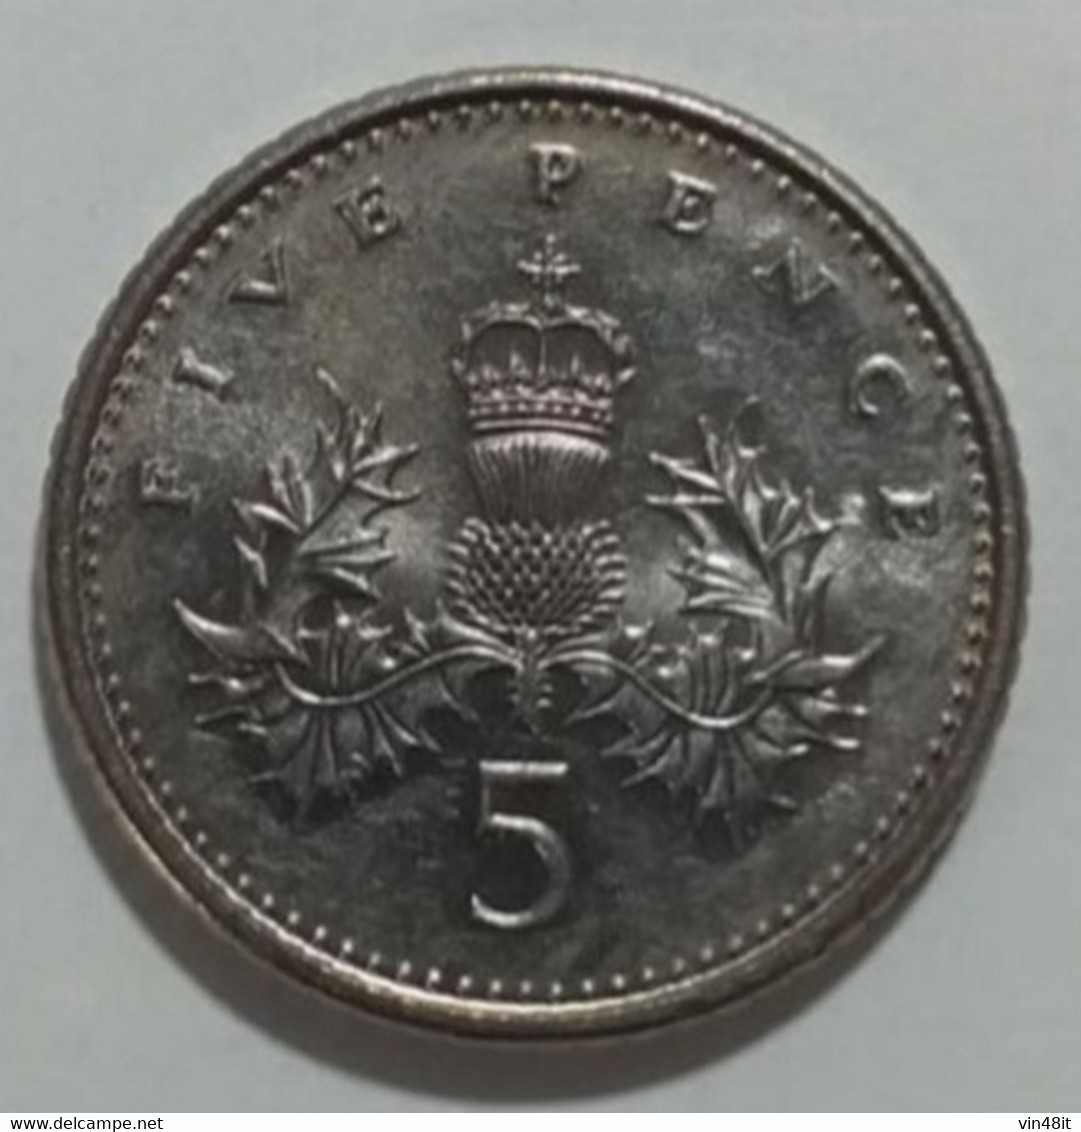 1990  - GRAN BRETAGNA  -  MONETA DEL VALORE DI 5 PENCE  -   USATA   - - 5 Pence & 5 New Pence